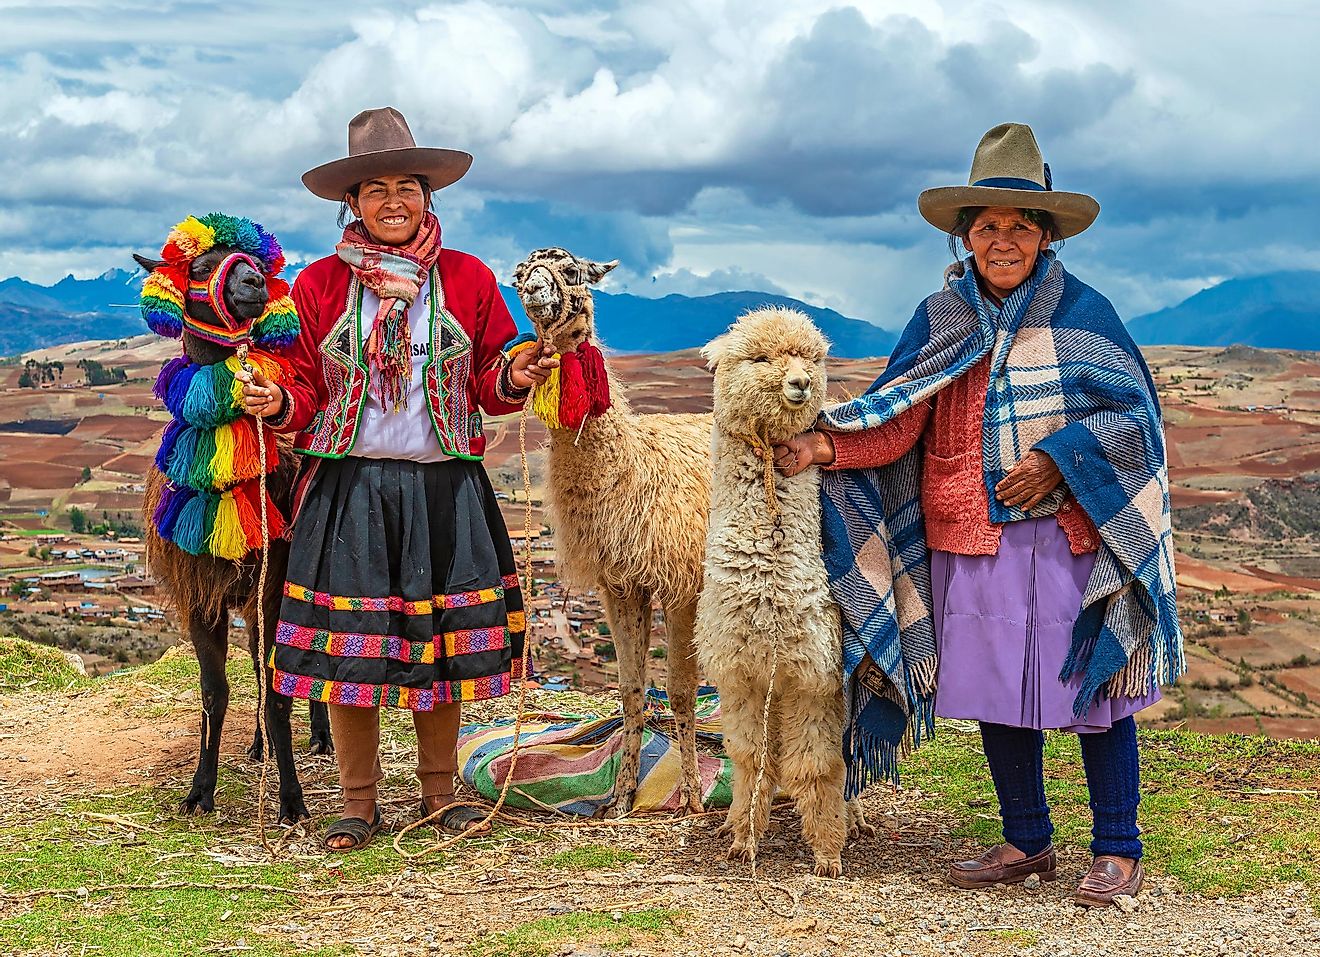 Quechua women with their llamas in Cusco, Peru. Image credit: SL-Photography/Shutterstock